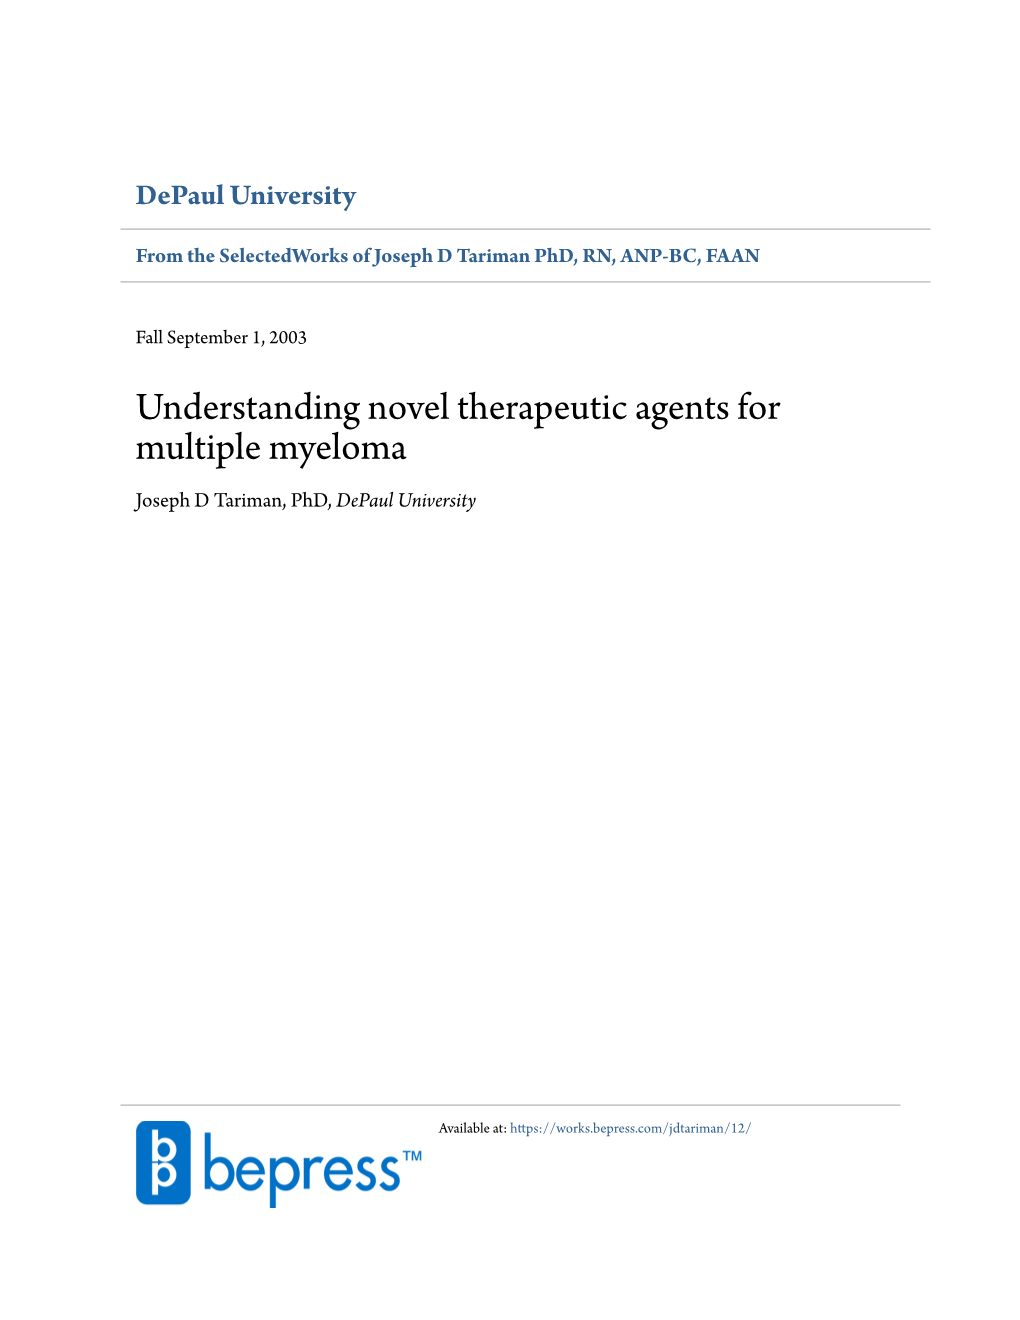 Understanding Novel Therapeutic Agents for Multiple Myeloma Joseph D Tariman, Phd, Depaul University